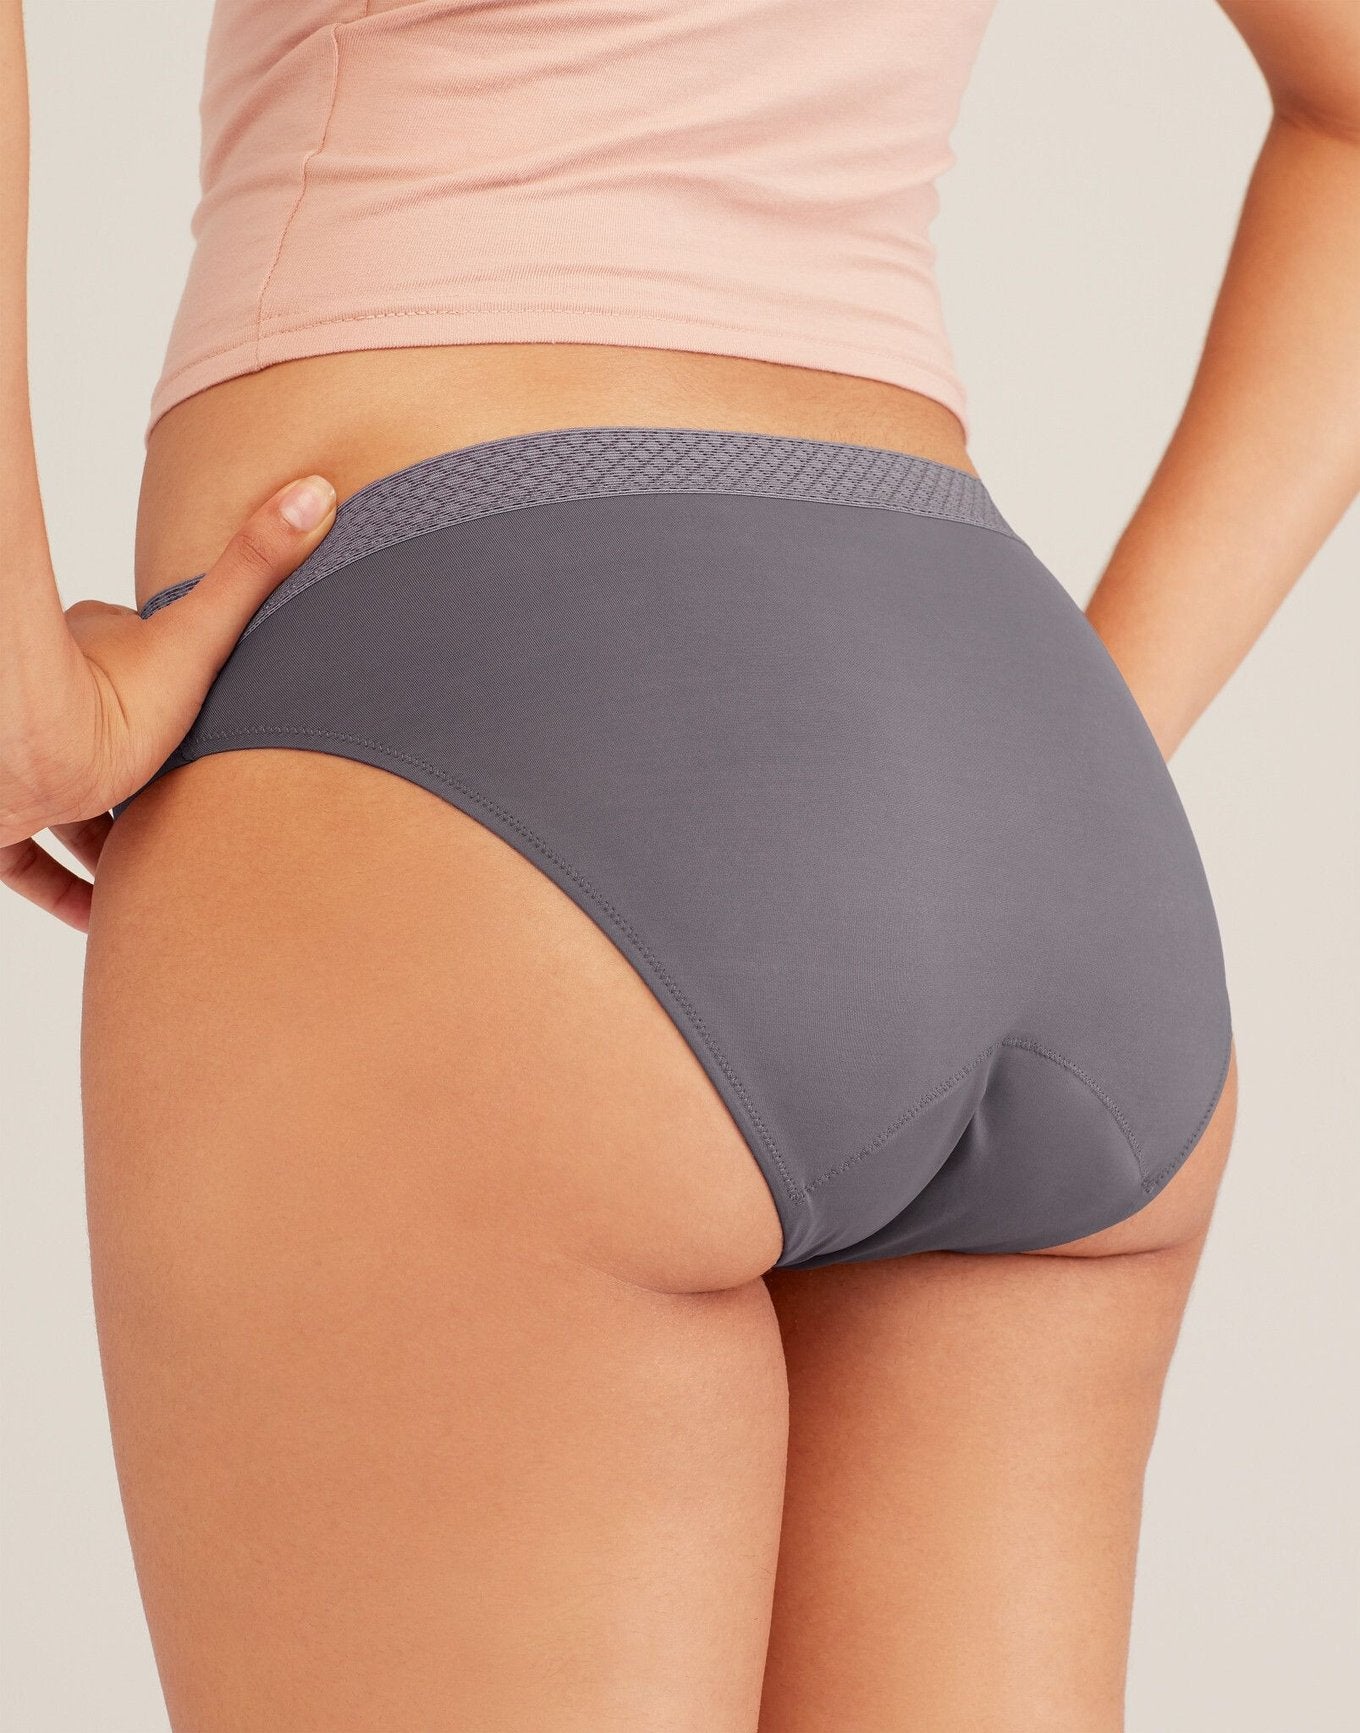 Katelin period-proof panty – Joyja